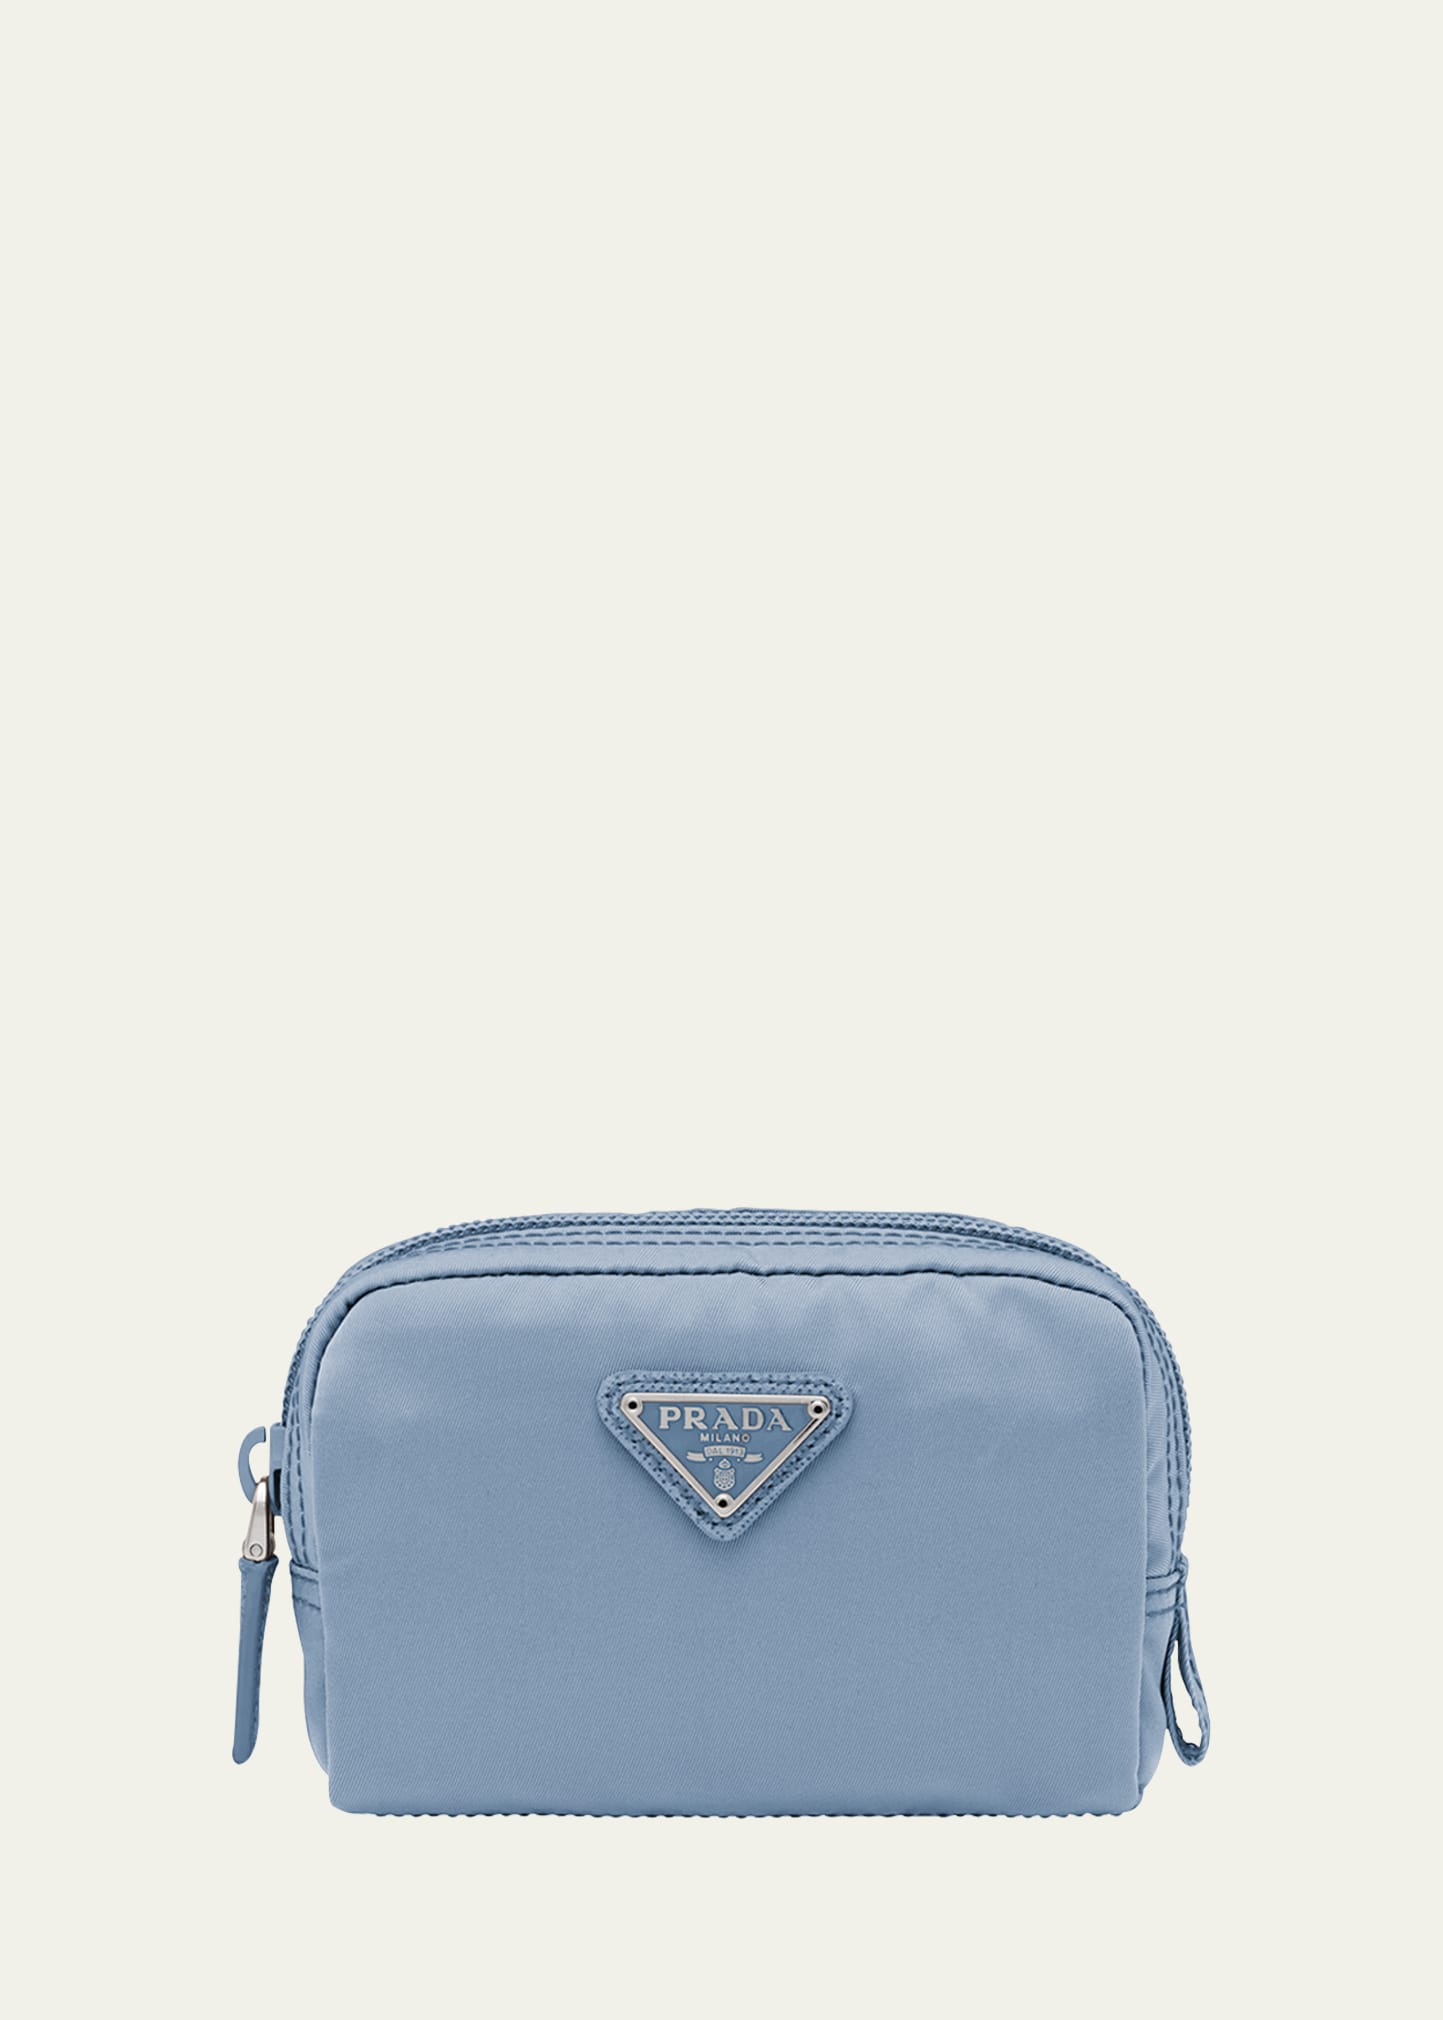 prada bag with coin purse